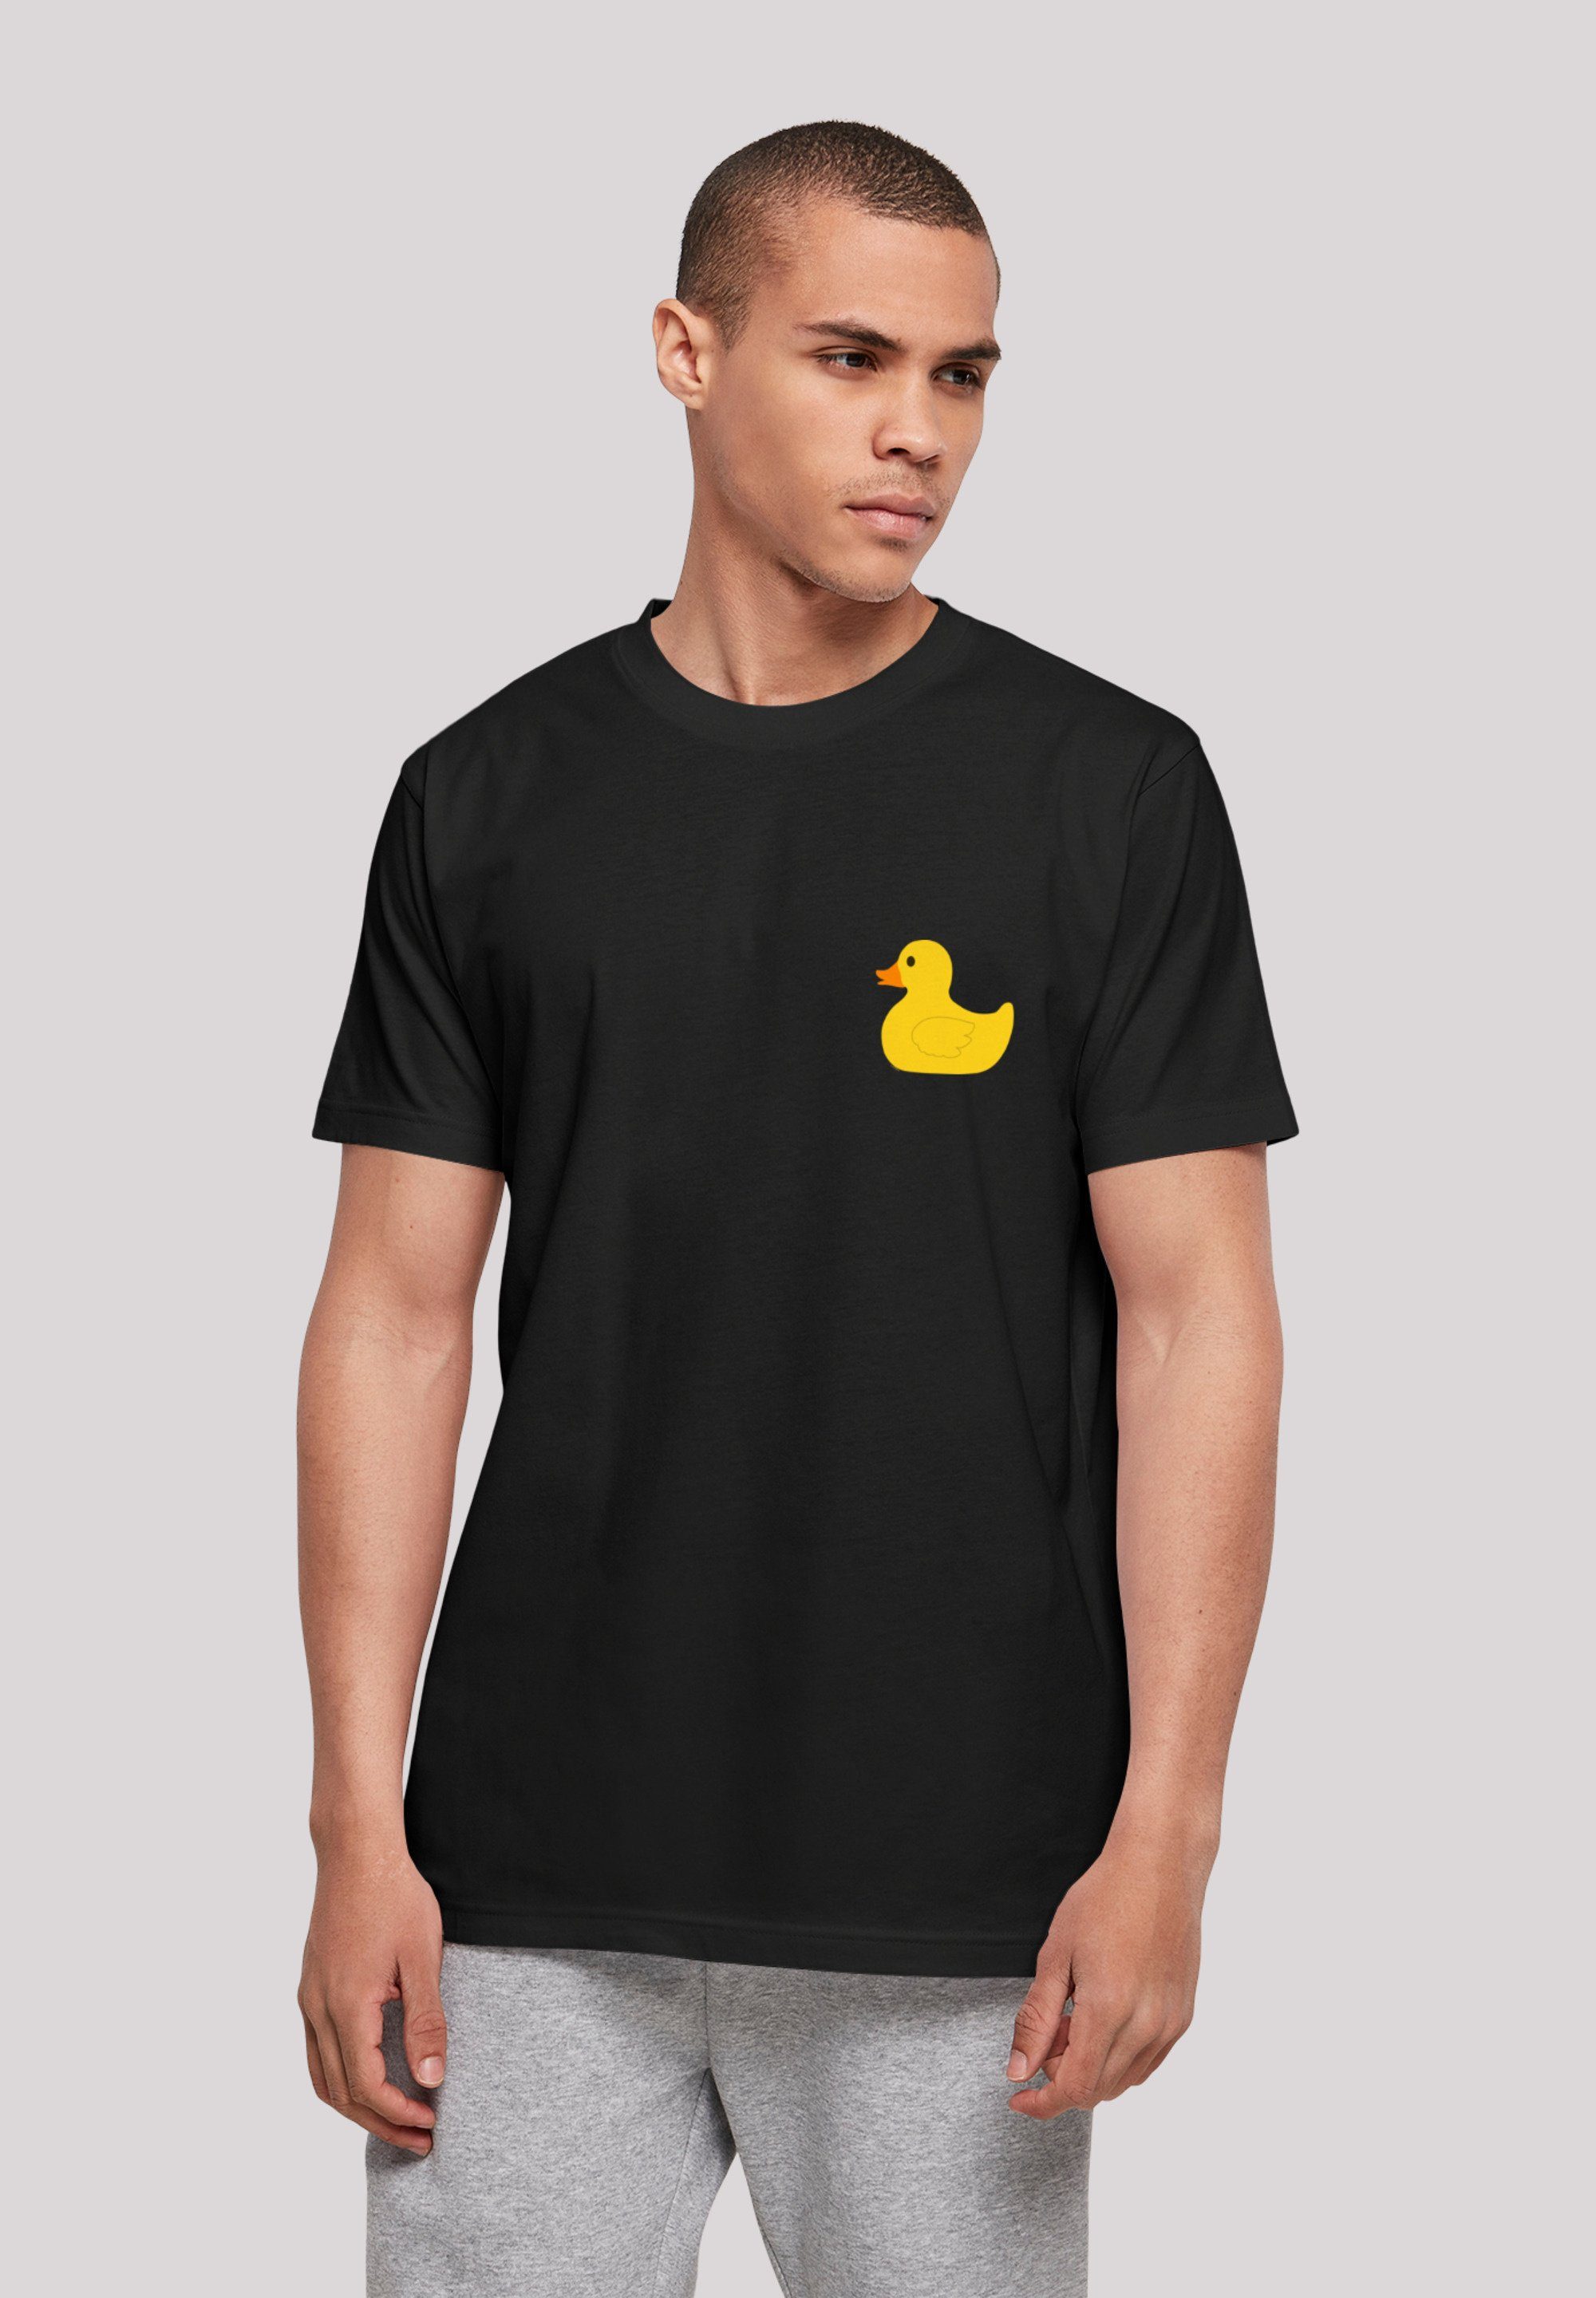 TEE T-Shirt Saum Rubber Doppelnähte Hals UNISEX am Print, Duck Yellow F4NT4STIC am Rippbündchen und